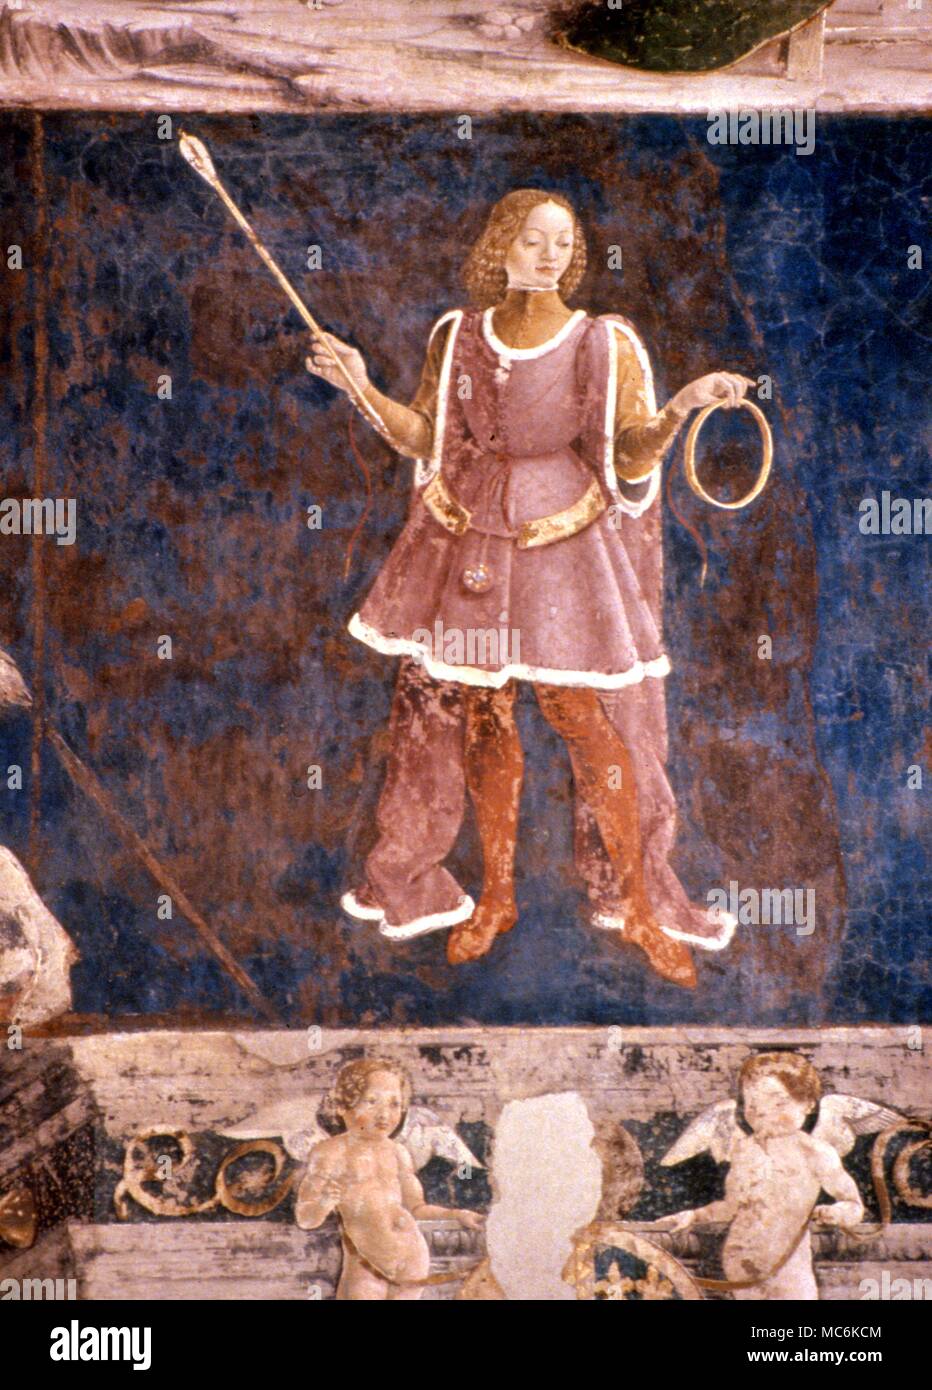 Italian Astrology Ferrara Man with wand zodiacal image from decanates series in the Schiffanoi Palace Ferrara Stock Photo